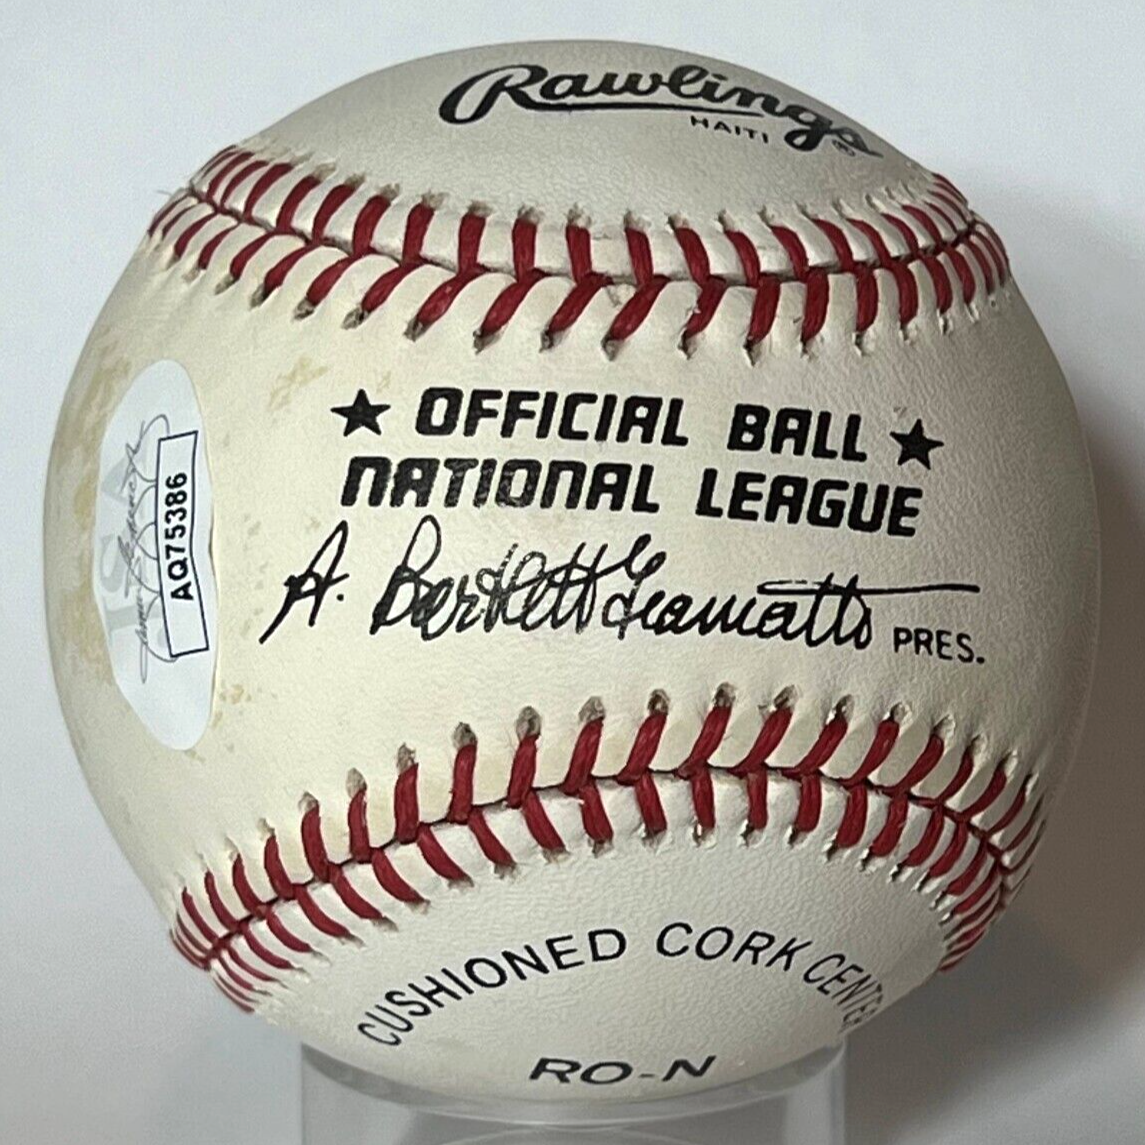 Robin Roberts Signed Autograph Baseball. Philadelphia Phillies. JSA signature.